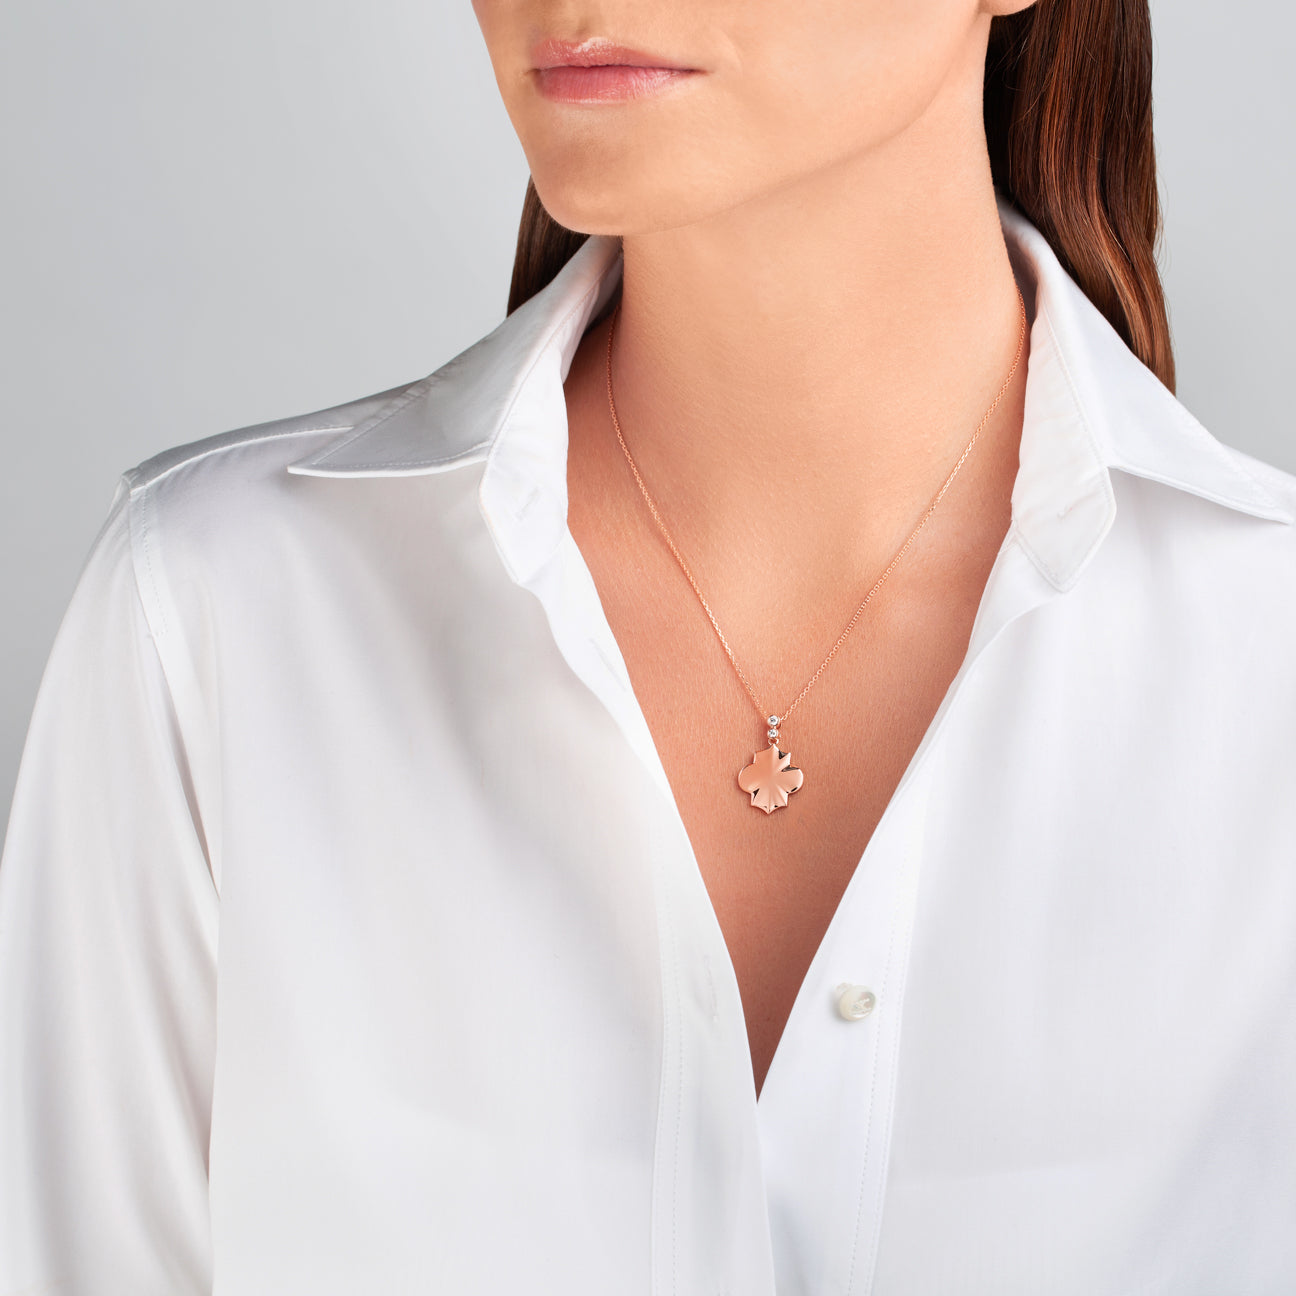 Regal Power- White Gold Pave Necklace - Ksenia Mirella Jewellery 